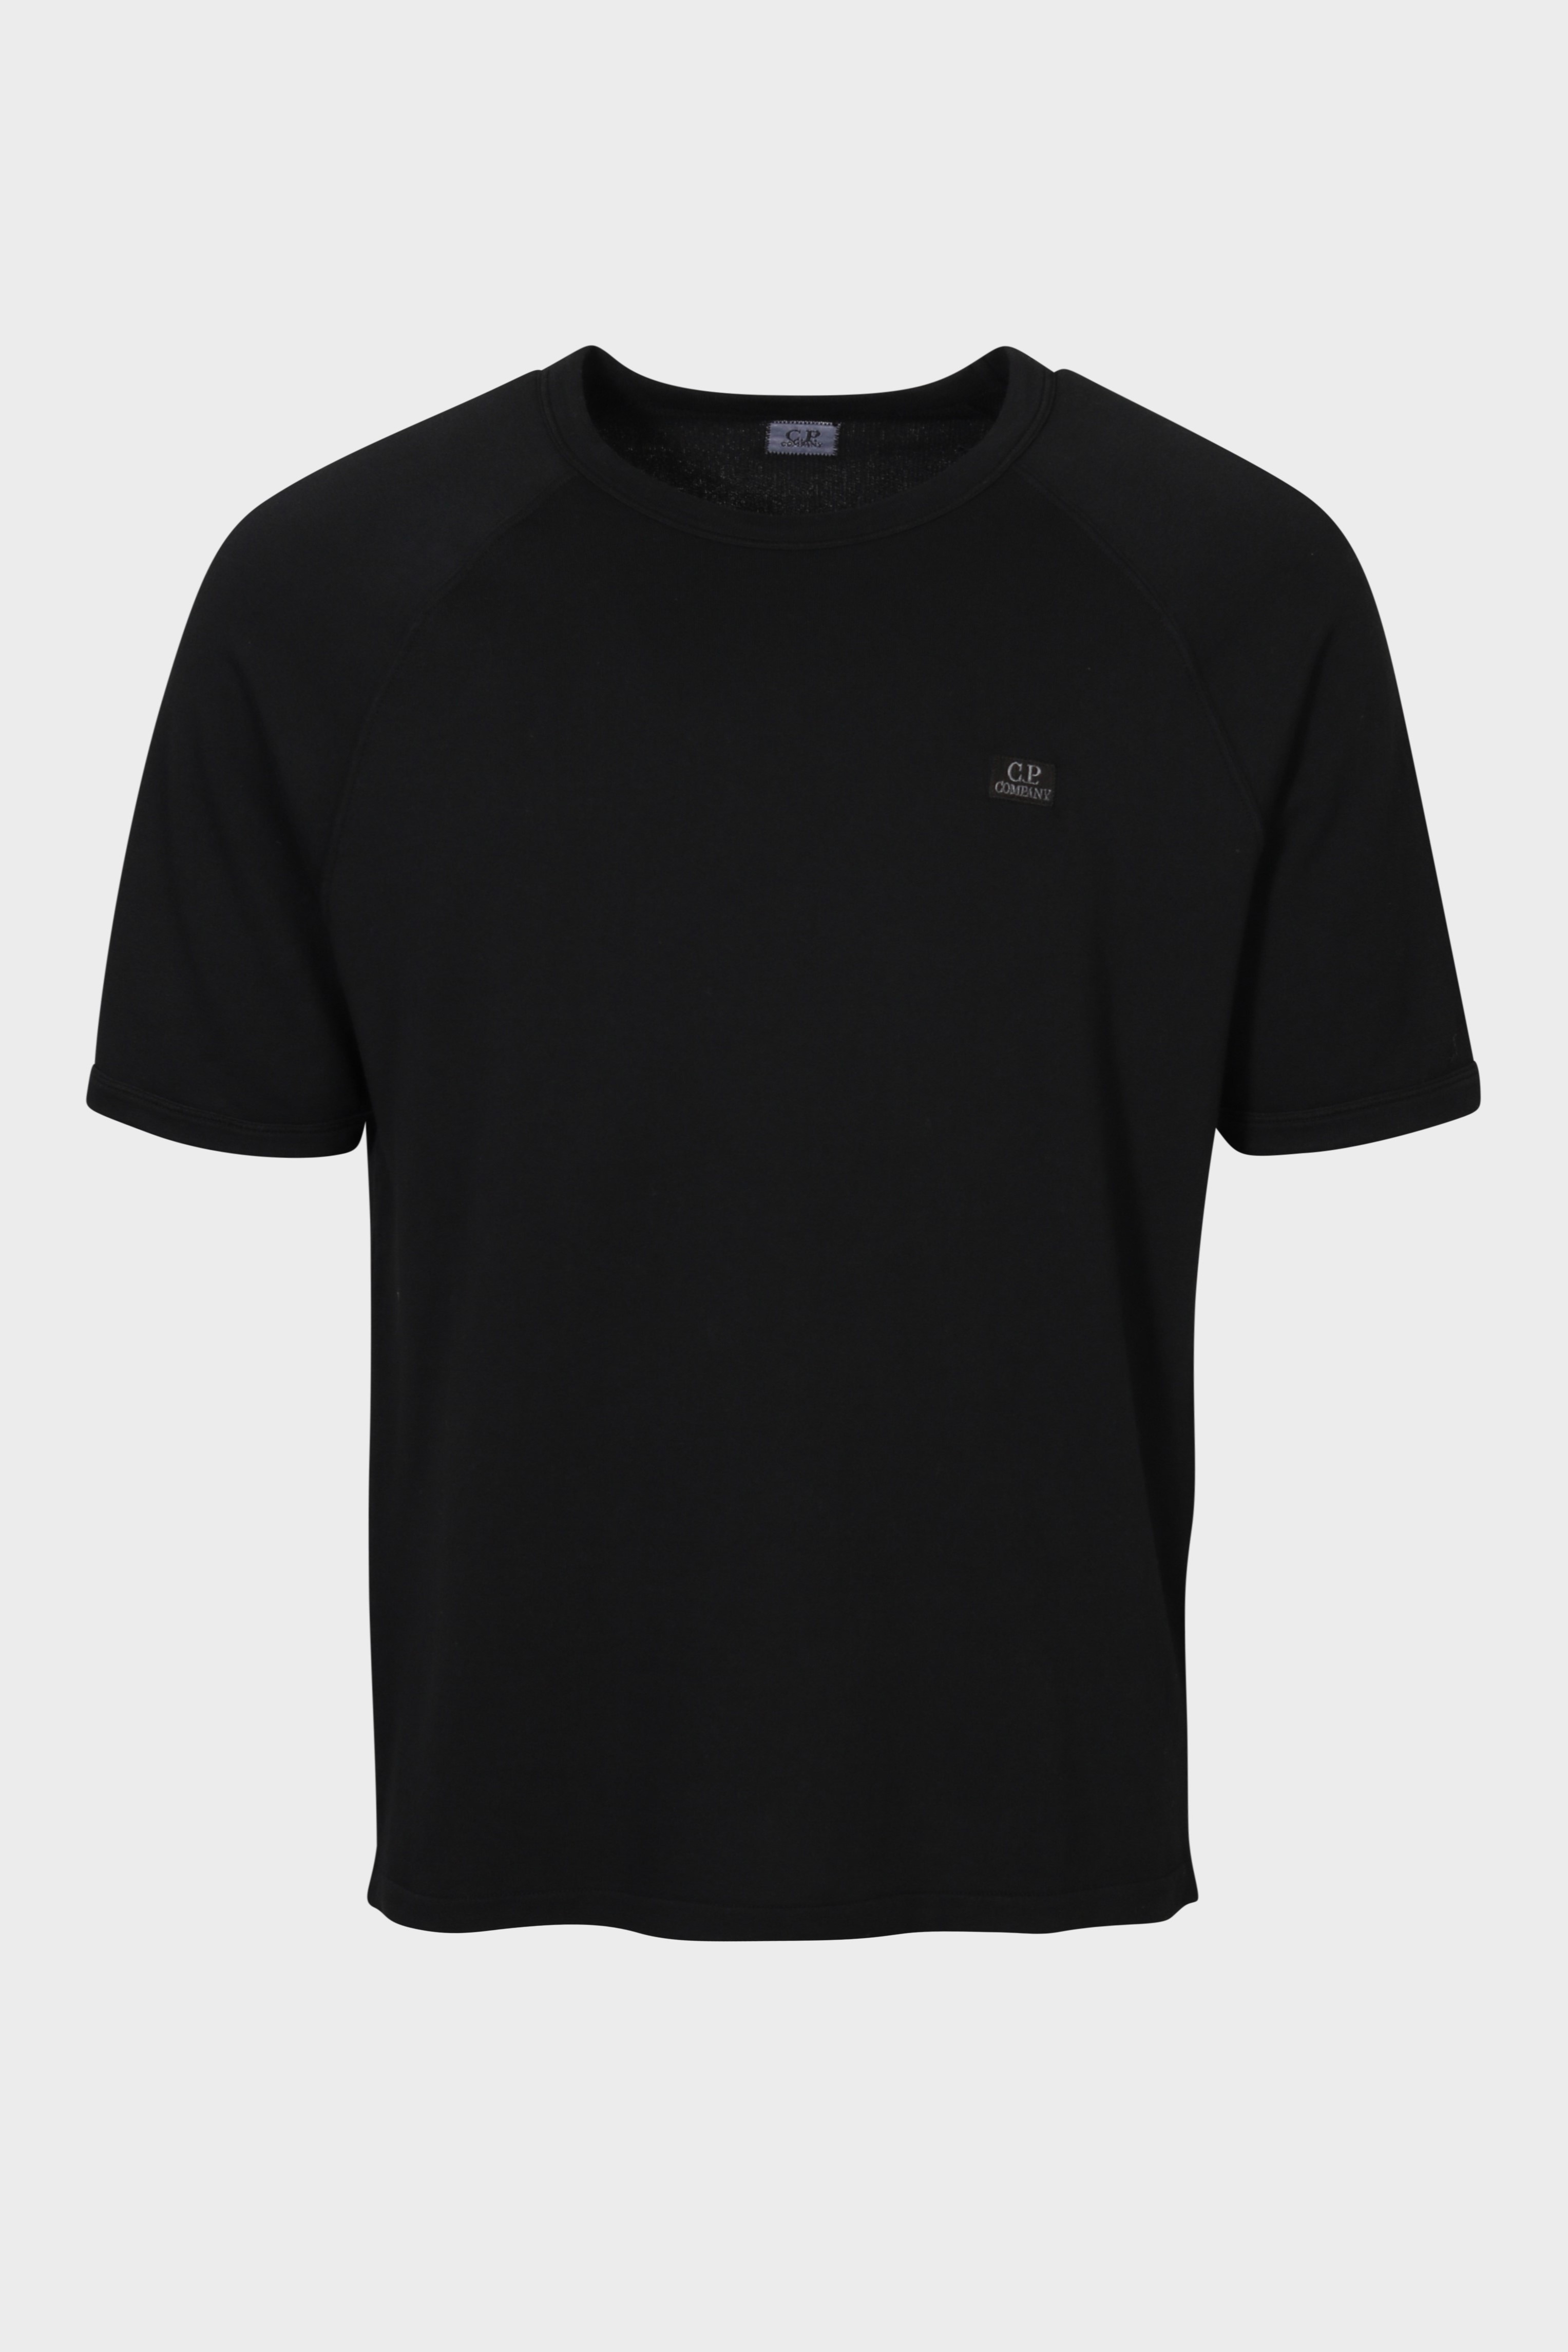 C.P. COMPANY Light Short Sleeve Sweatshirt in Black